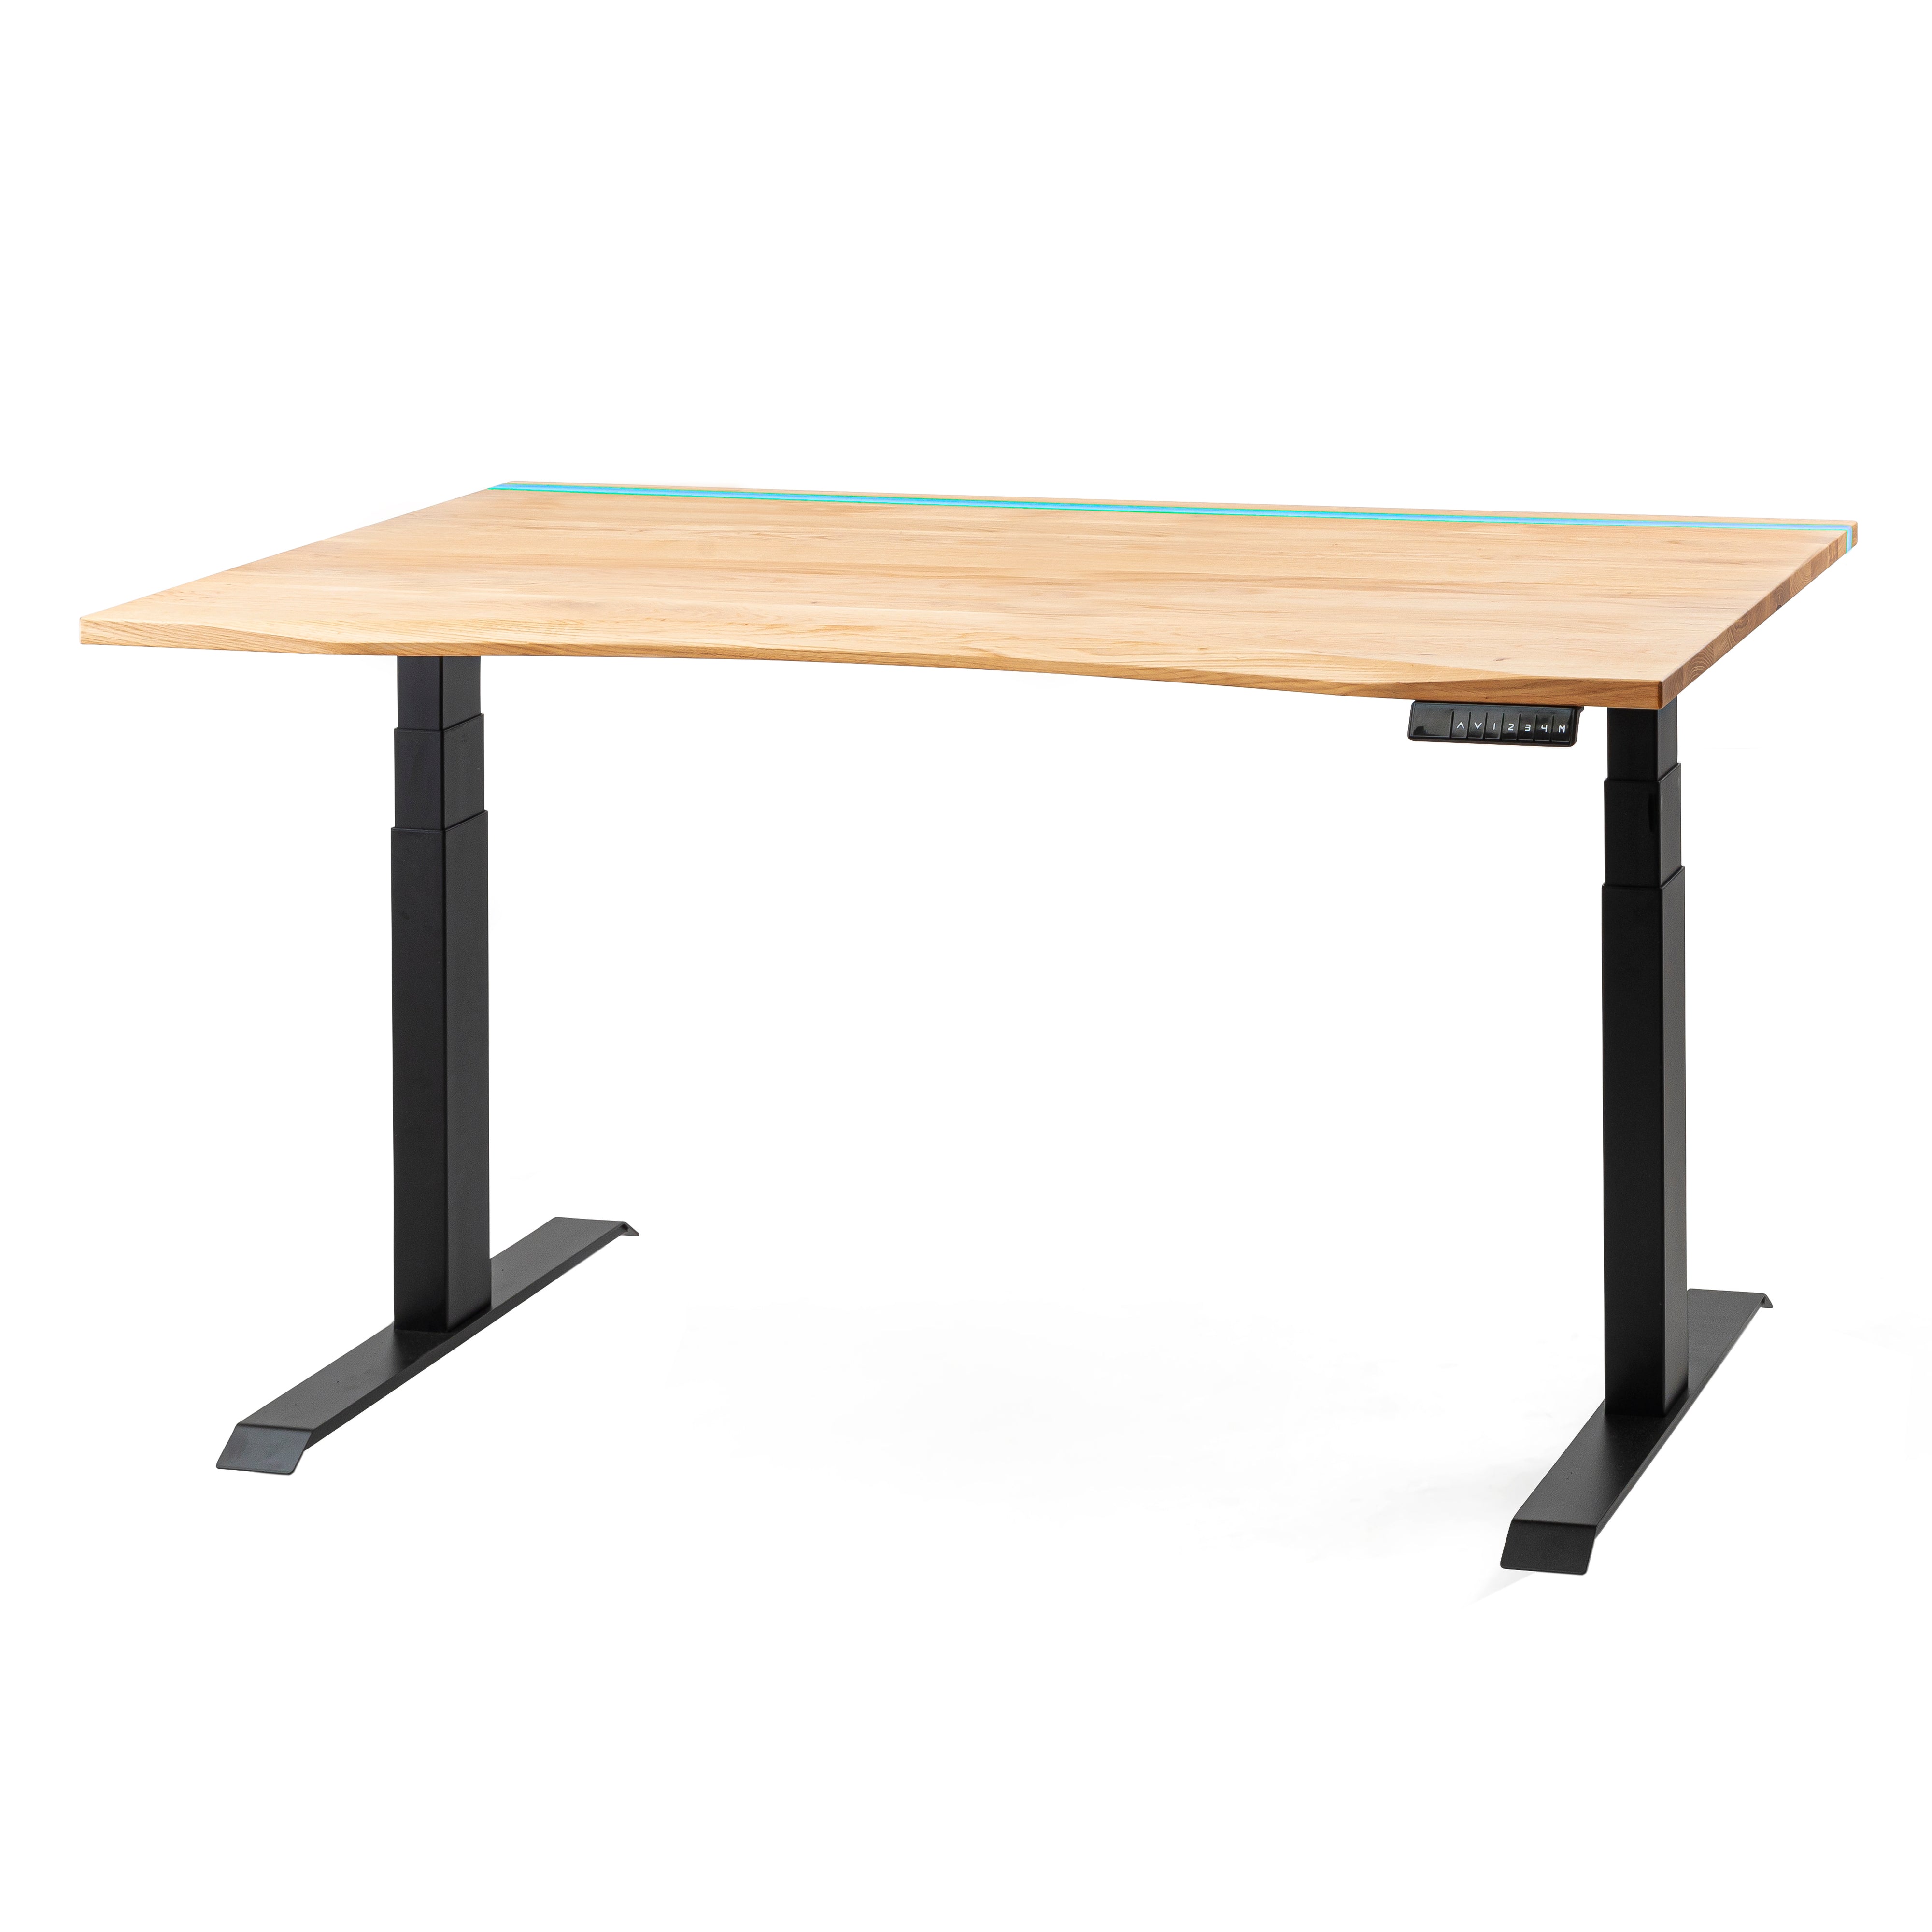 Oak standing desk with epoxy LED light